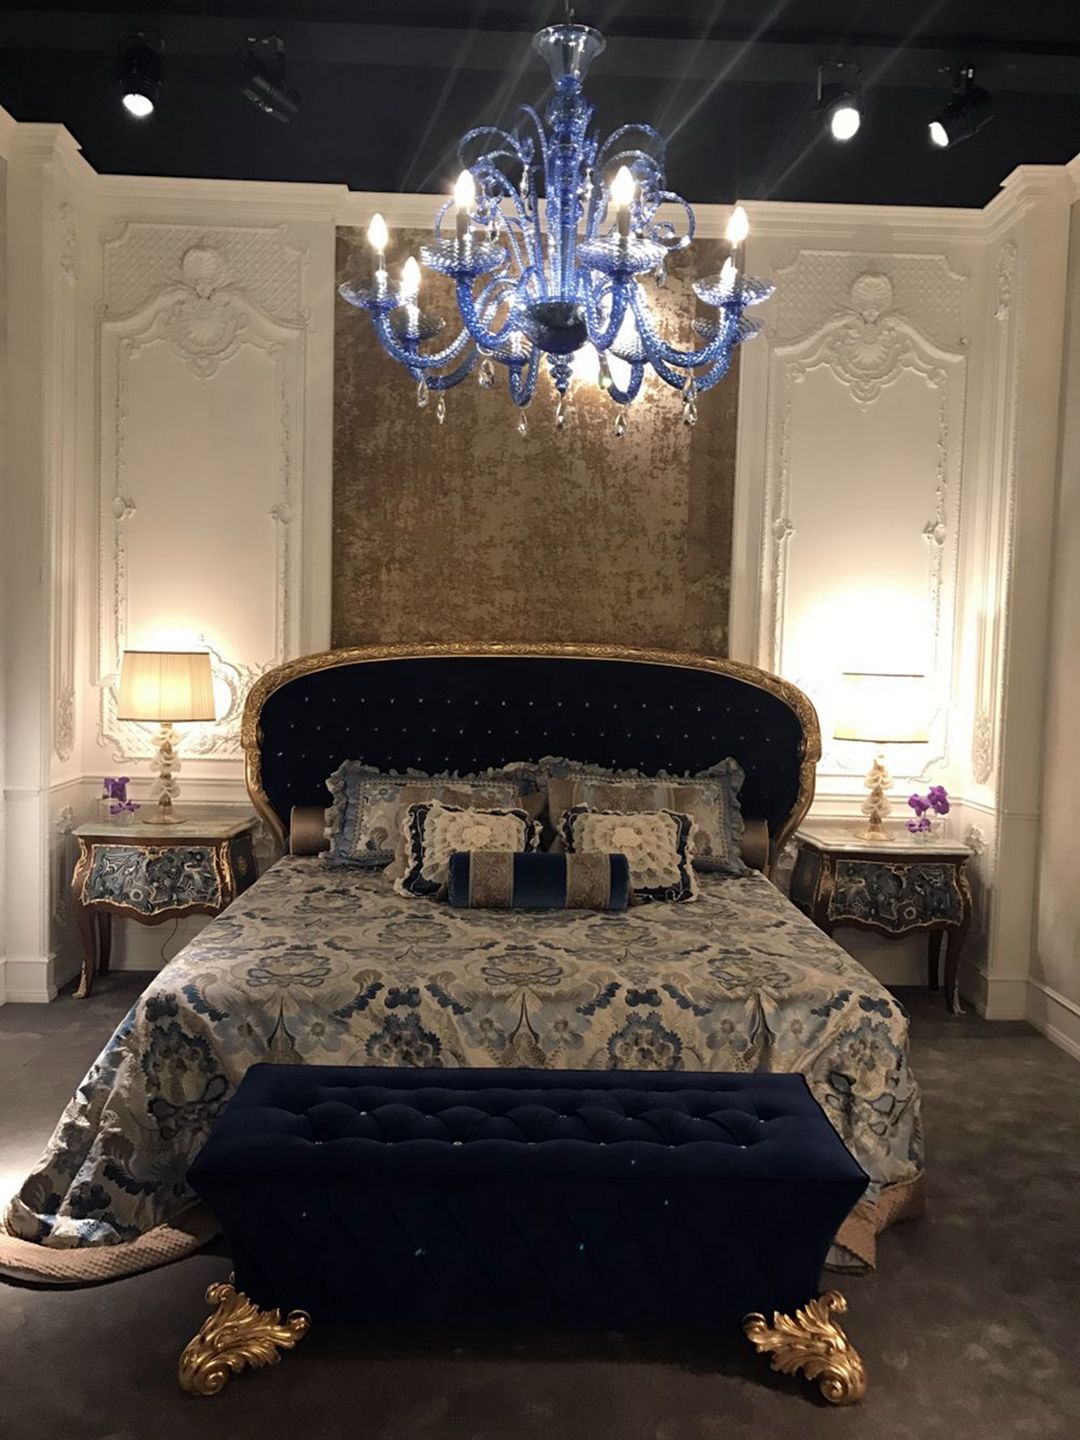 Blue Crystal Chandelier And Blue Bed Furniture Design From Homedit